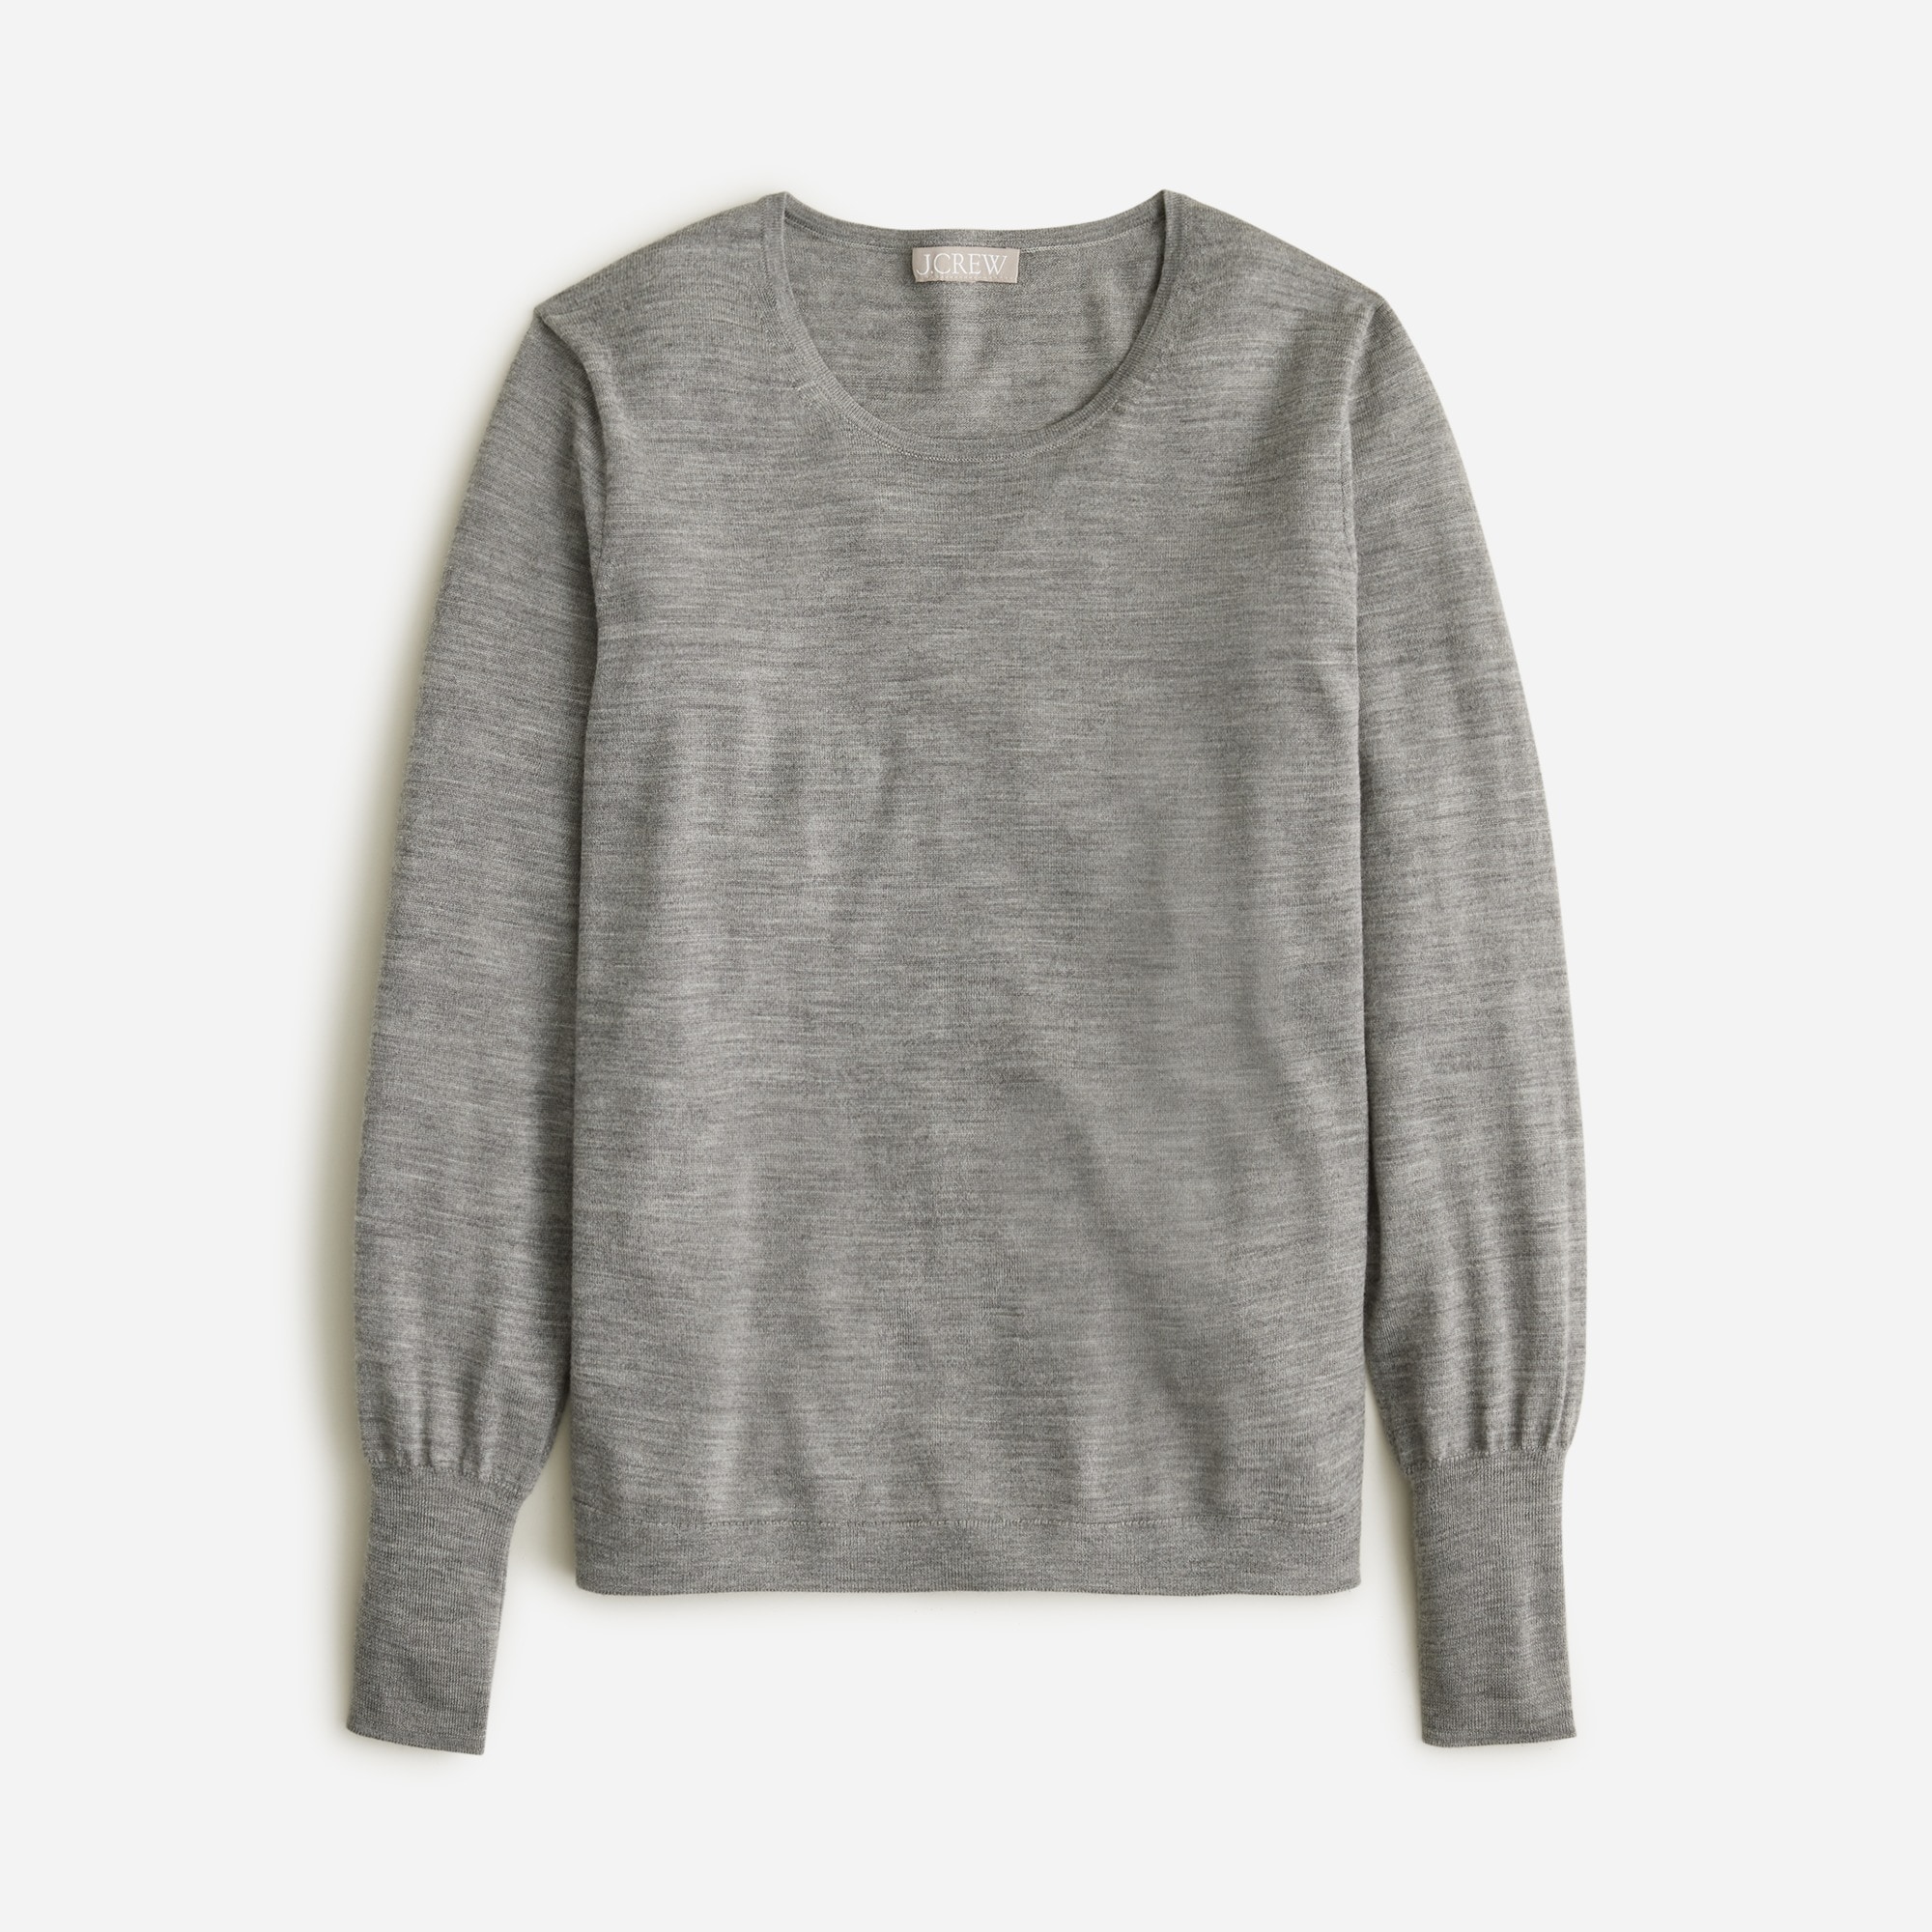  Halle crewneck sweater